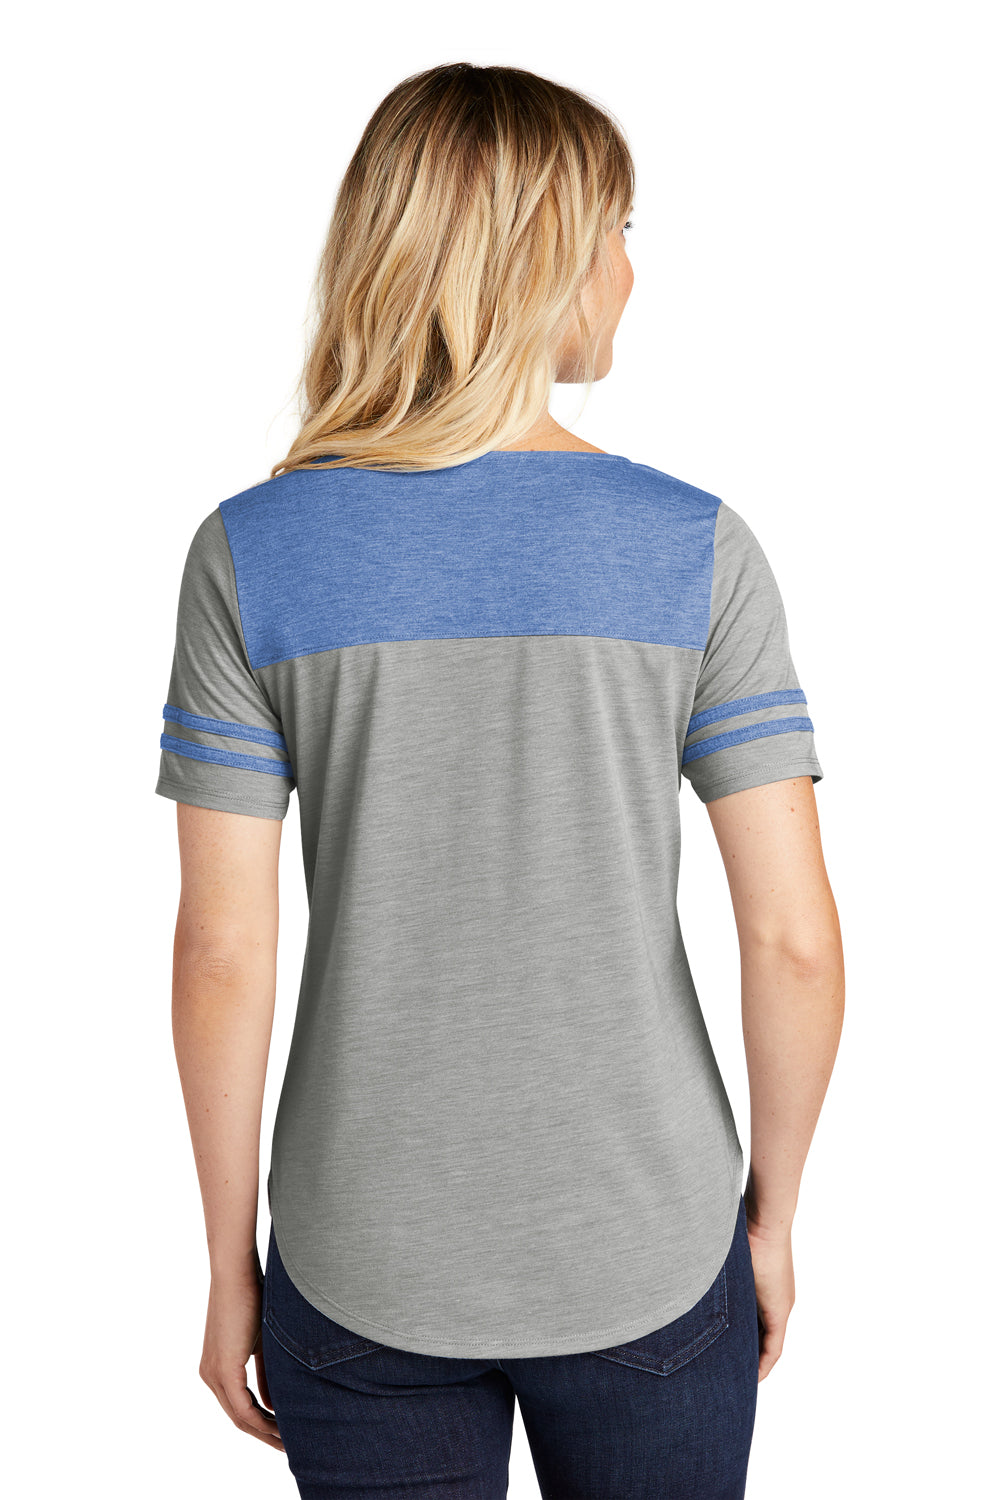 Sport-Tek Womens Fan Moisture Wicking Short Sleeve Crewneck T-Shirt Heather True Royal Blue/Heather Light Grey Side